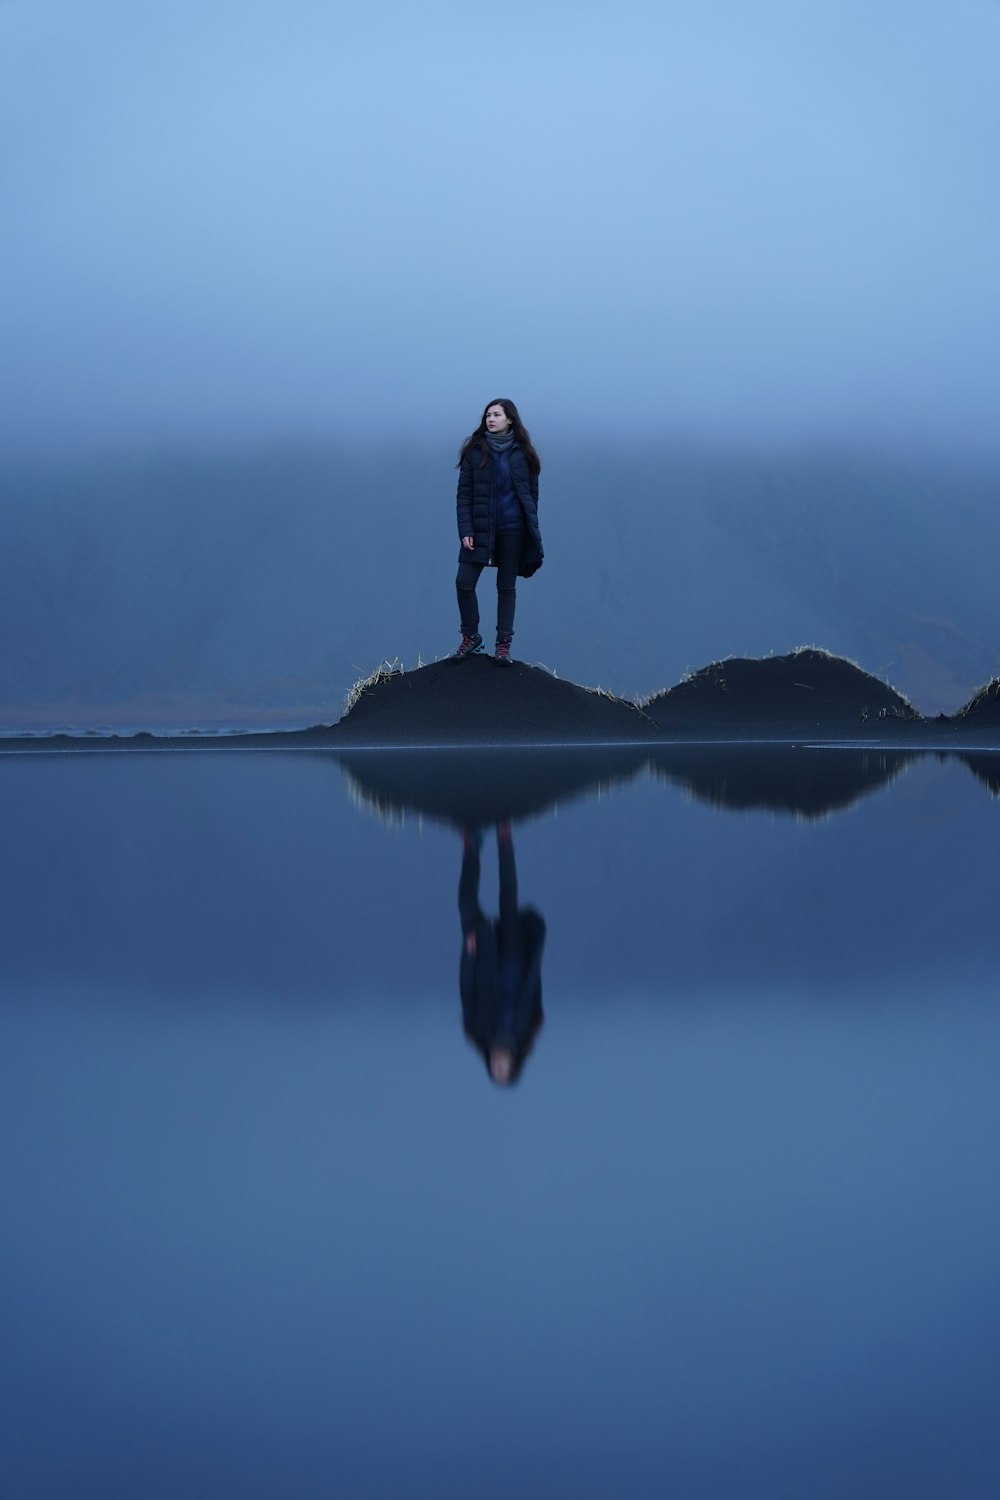 Una persona parada sobre una roca en el agua